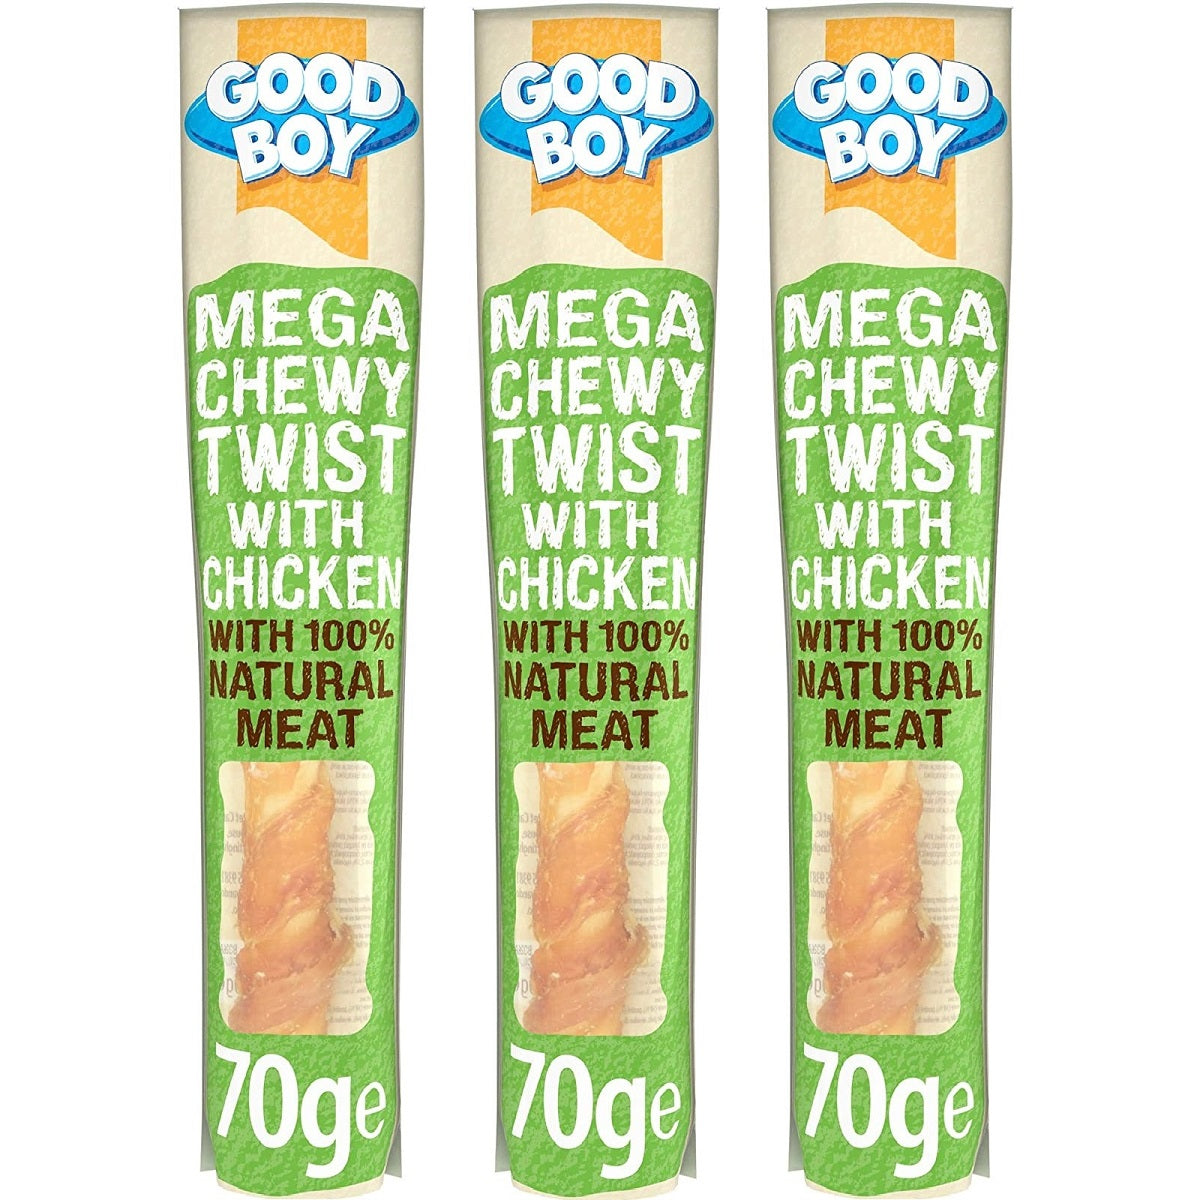 Good Boy - Mega Chewy Twist with Chicken (70g)